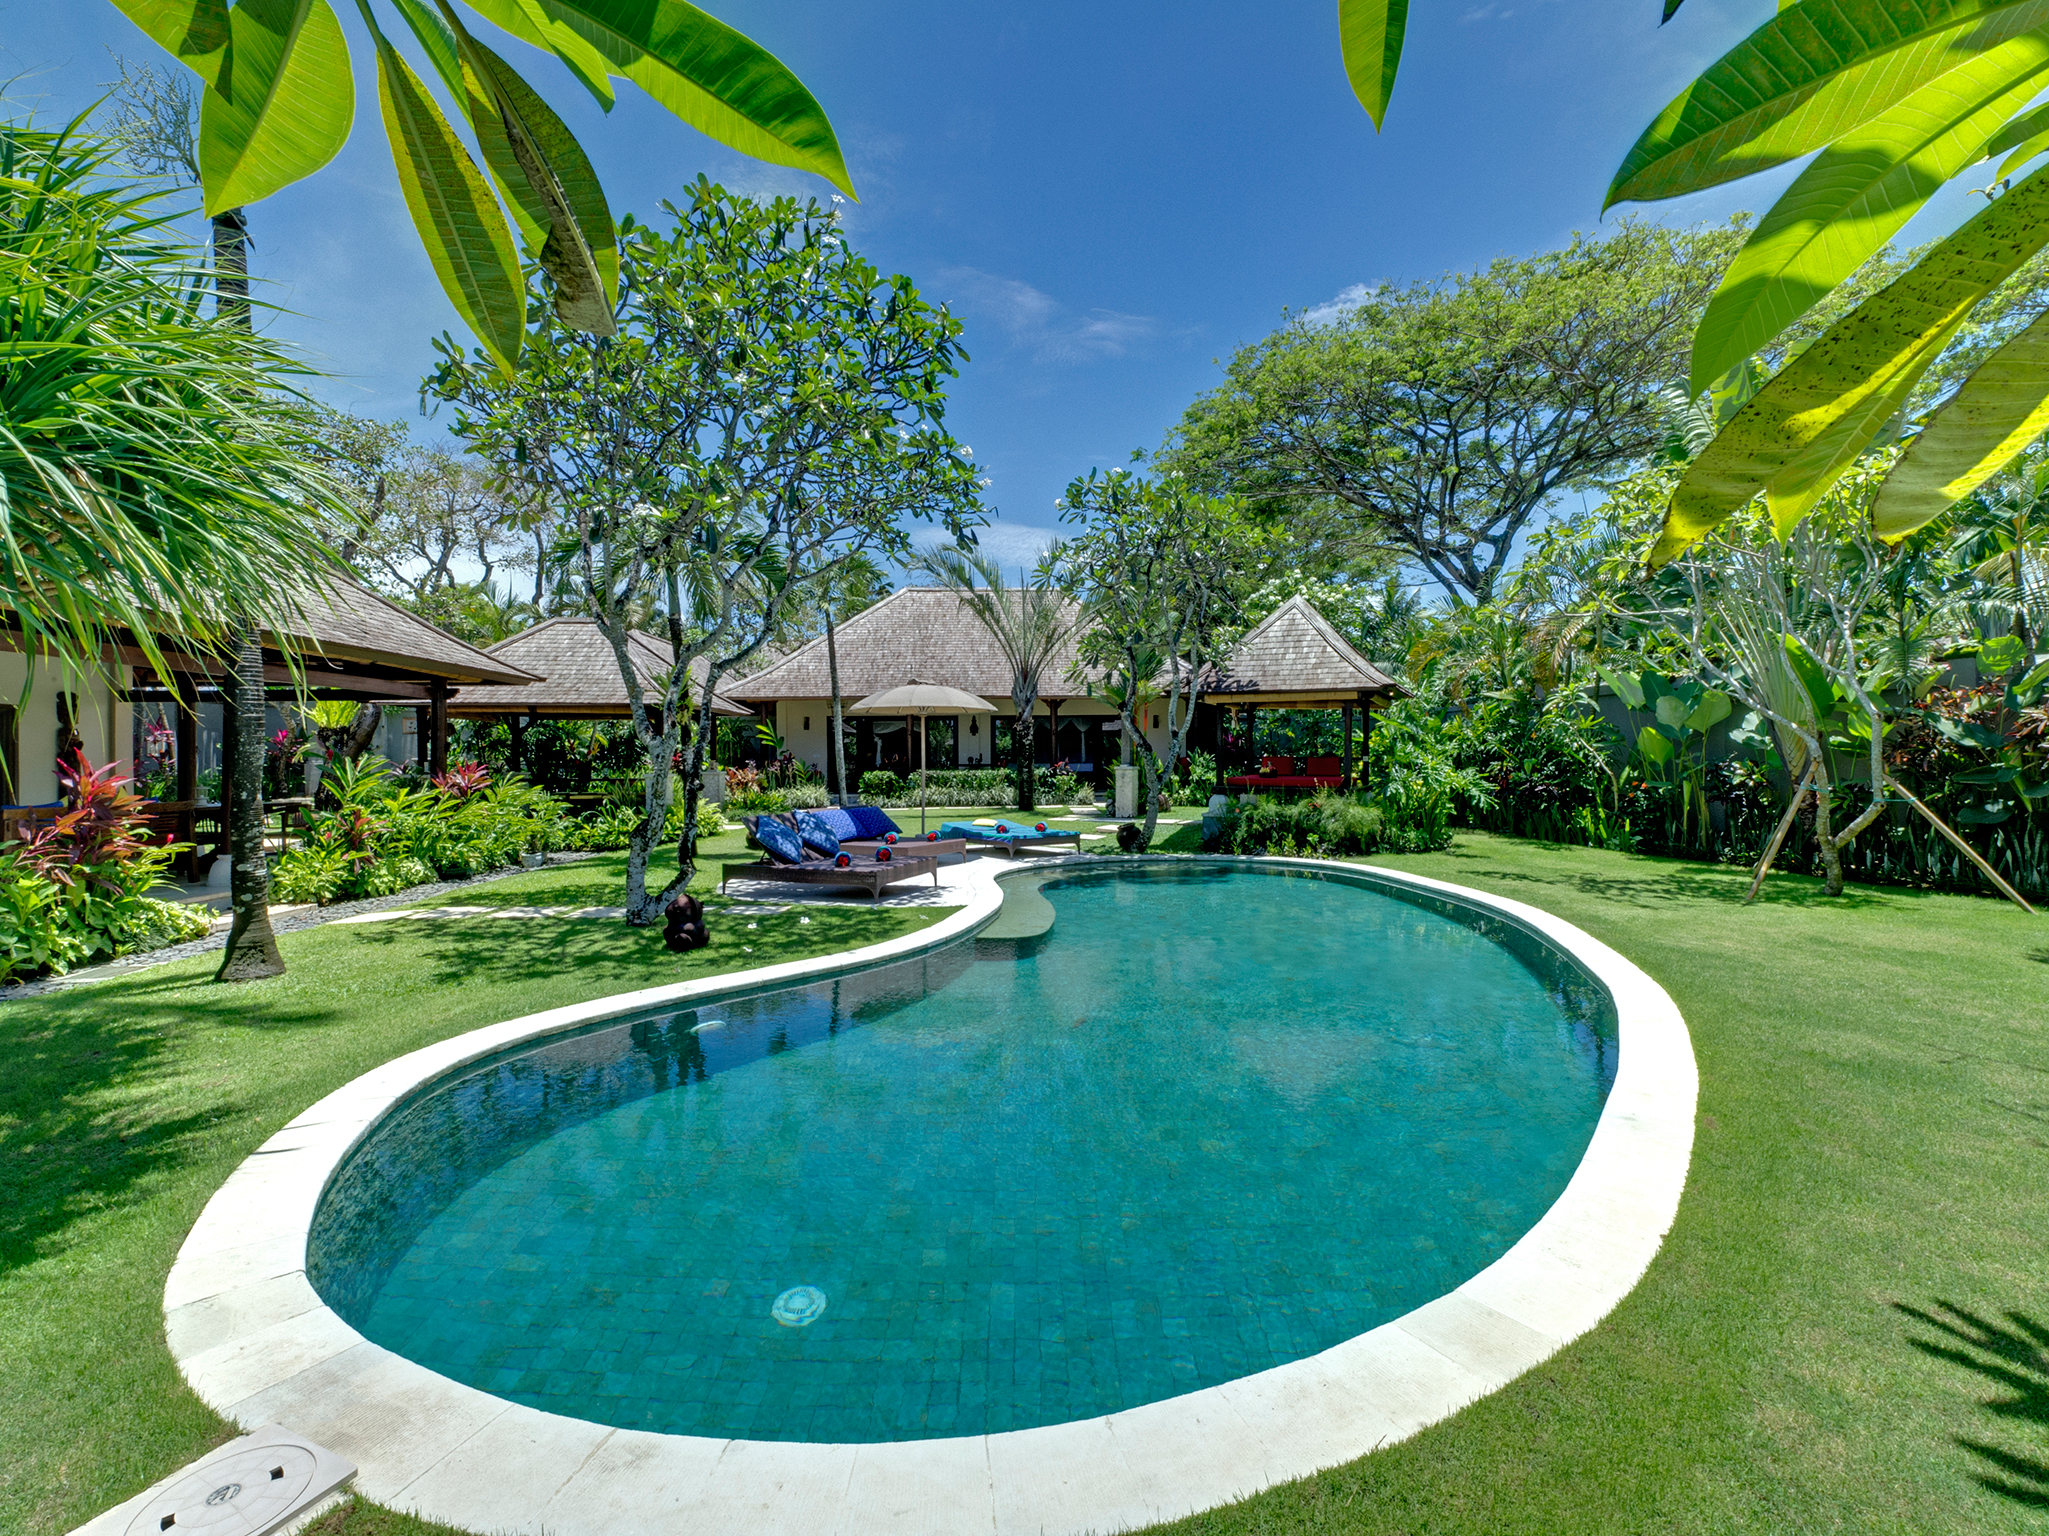 2. Villa Kakatua - Midday by the pool - Villa Kakatua, Canggu, Bali